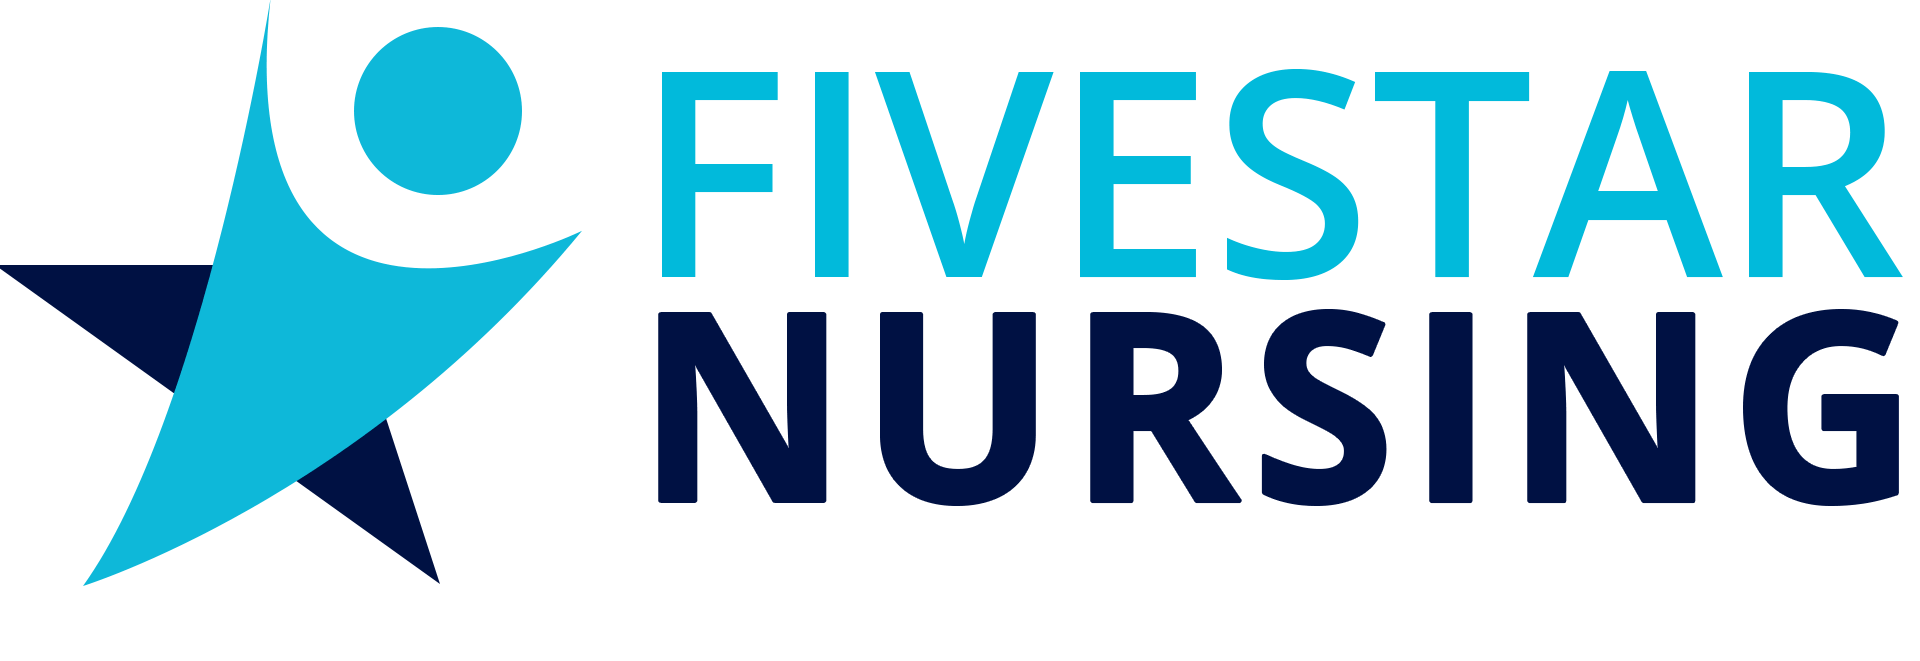 Five Star Nursing: Certified Nursing Assistant Services in New York ...